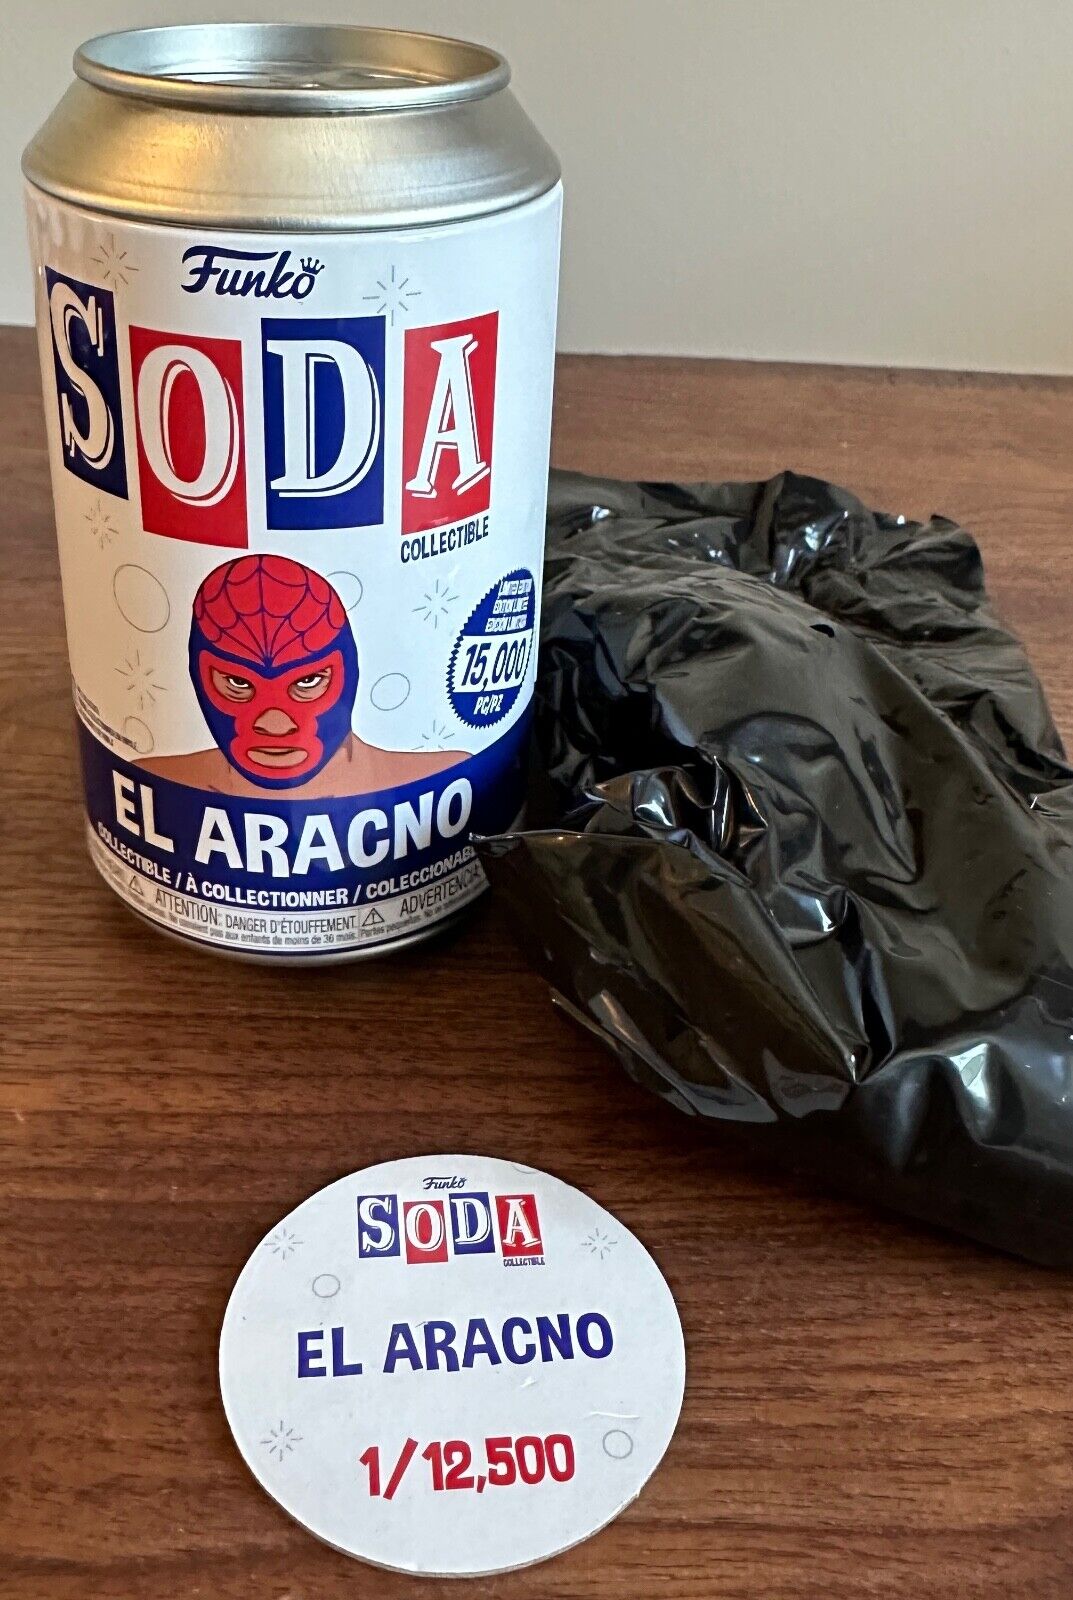 Funko Soda El Aracno Spiderman Figure Sealed Bag 1/12,500 Marvel